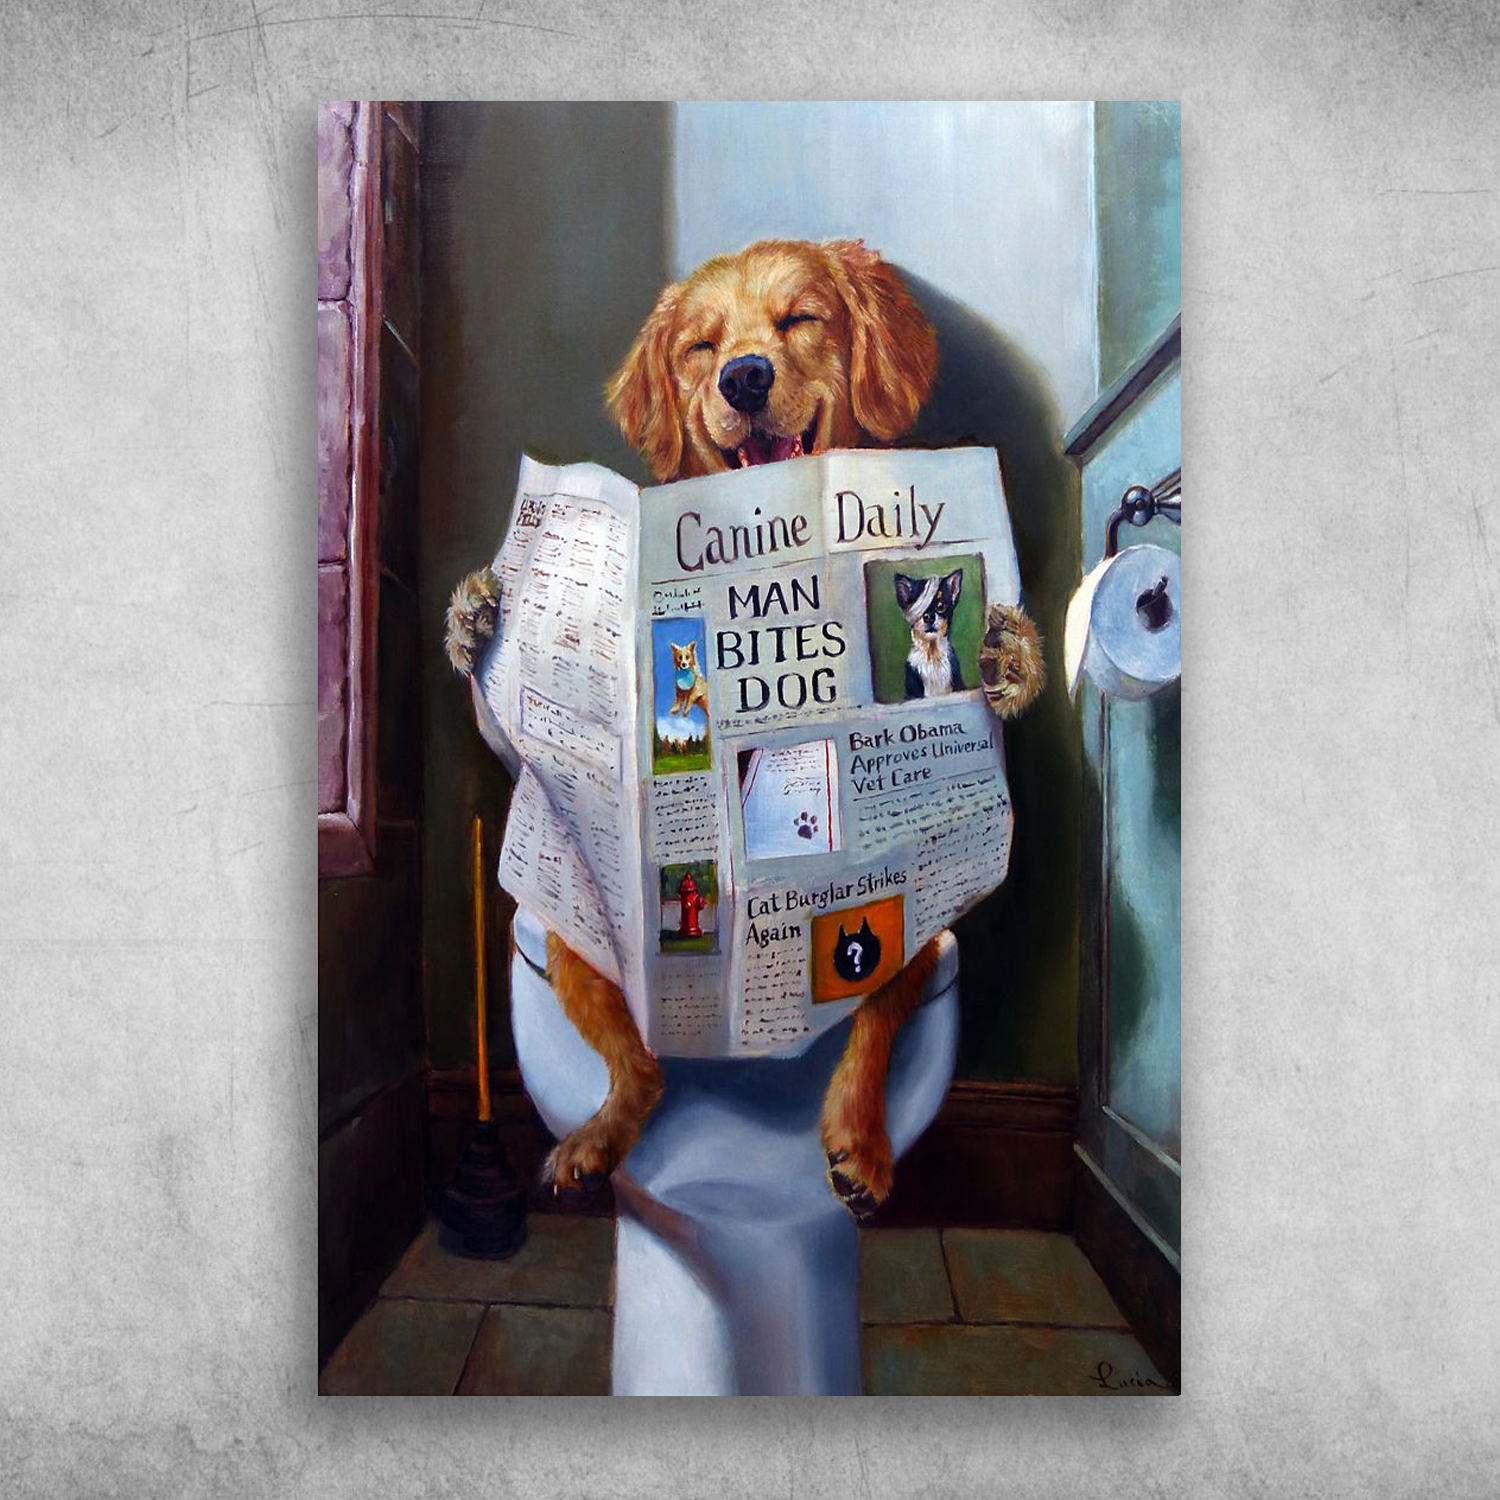 Golden Retriever Reading The Newspaper On Toilet